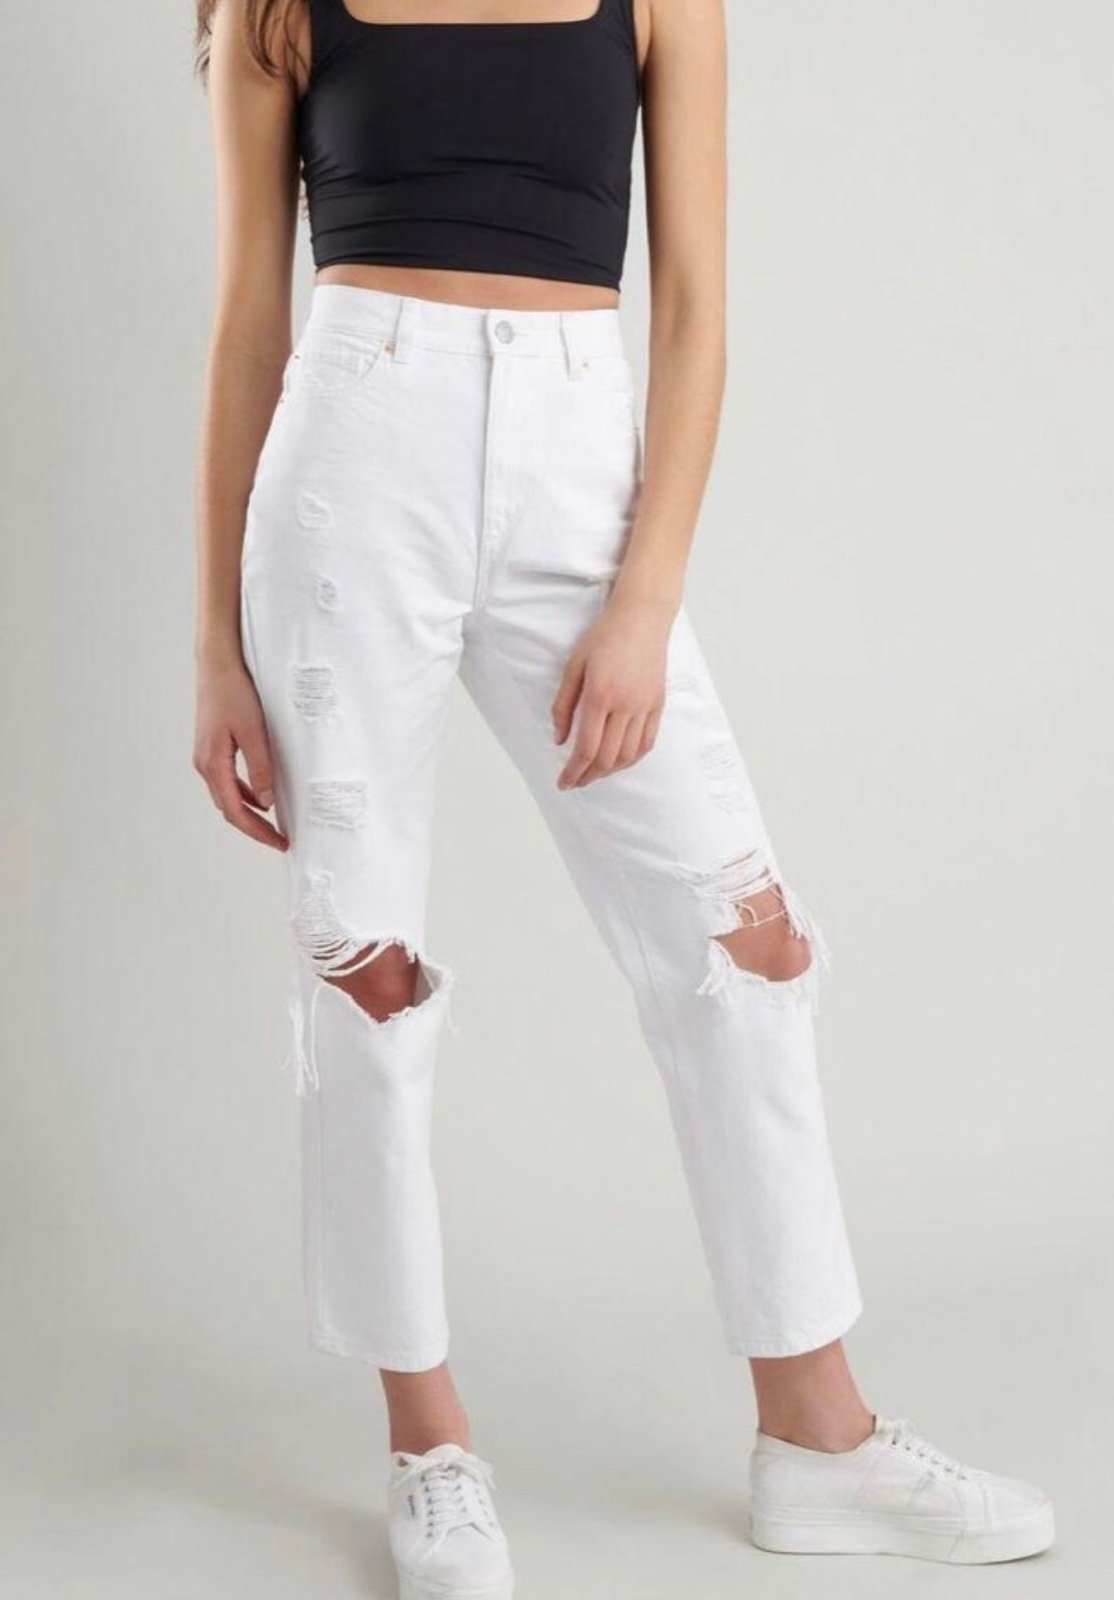 Beautiful NWT Garage White Jeans hI8UKwge4 on sale